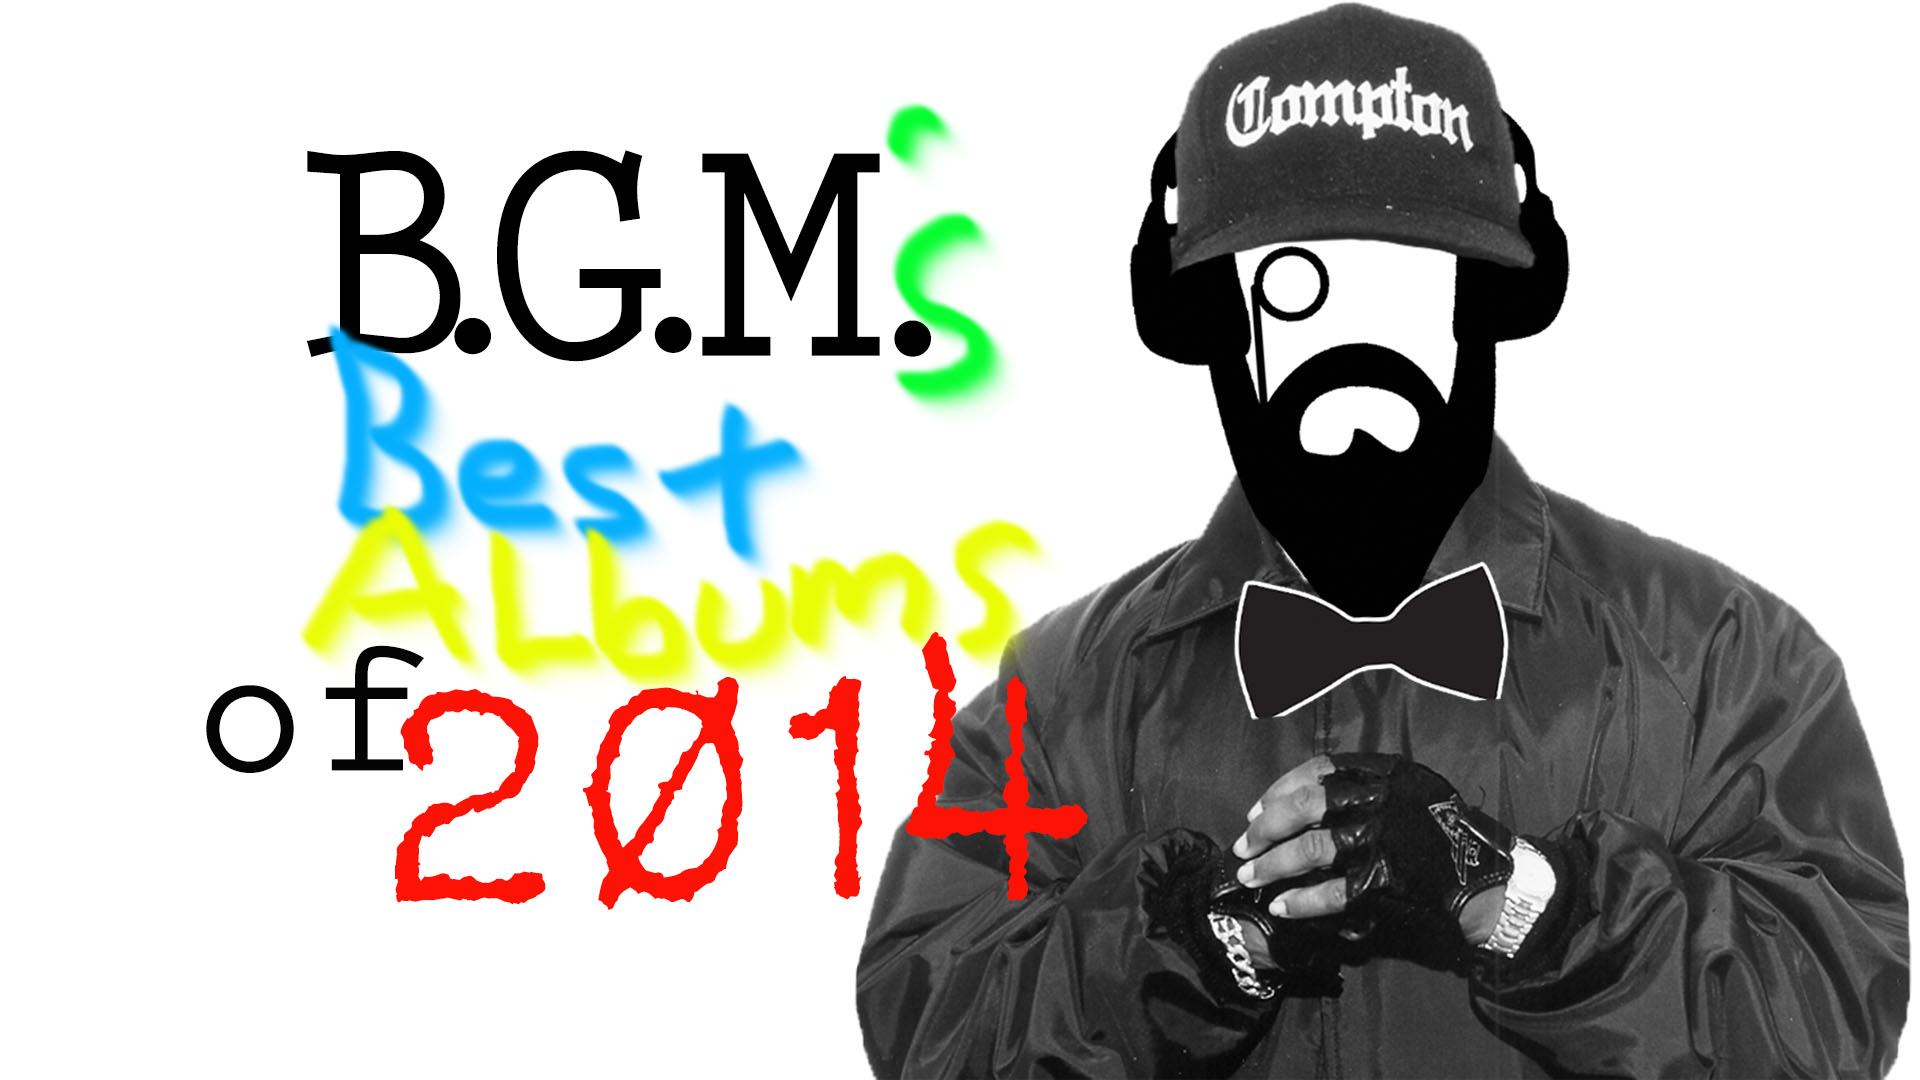 Best Albums of 2014